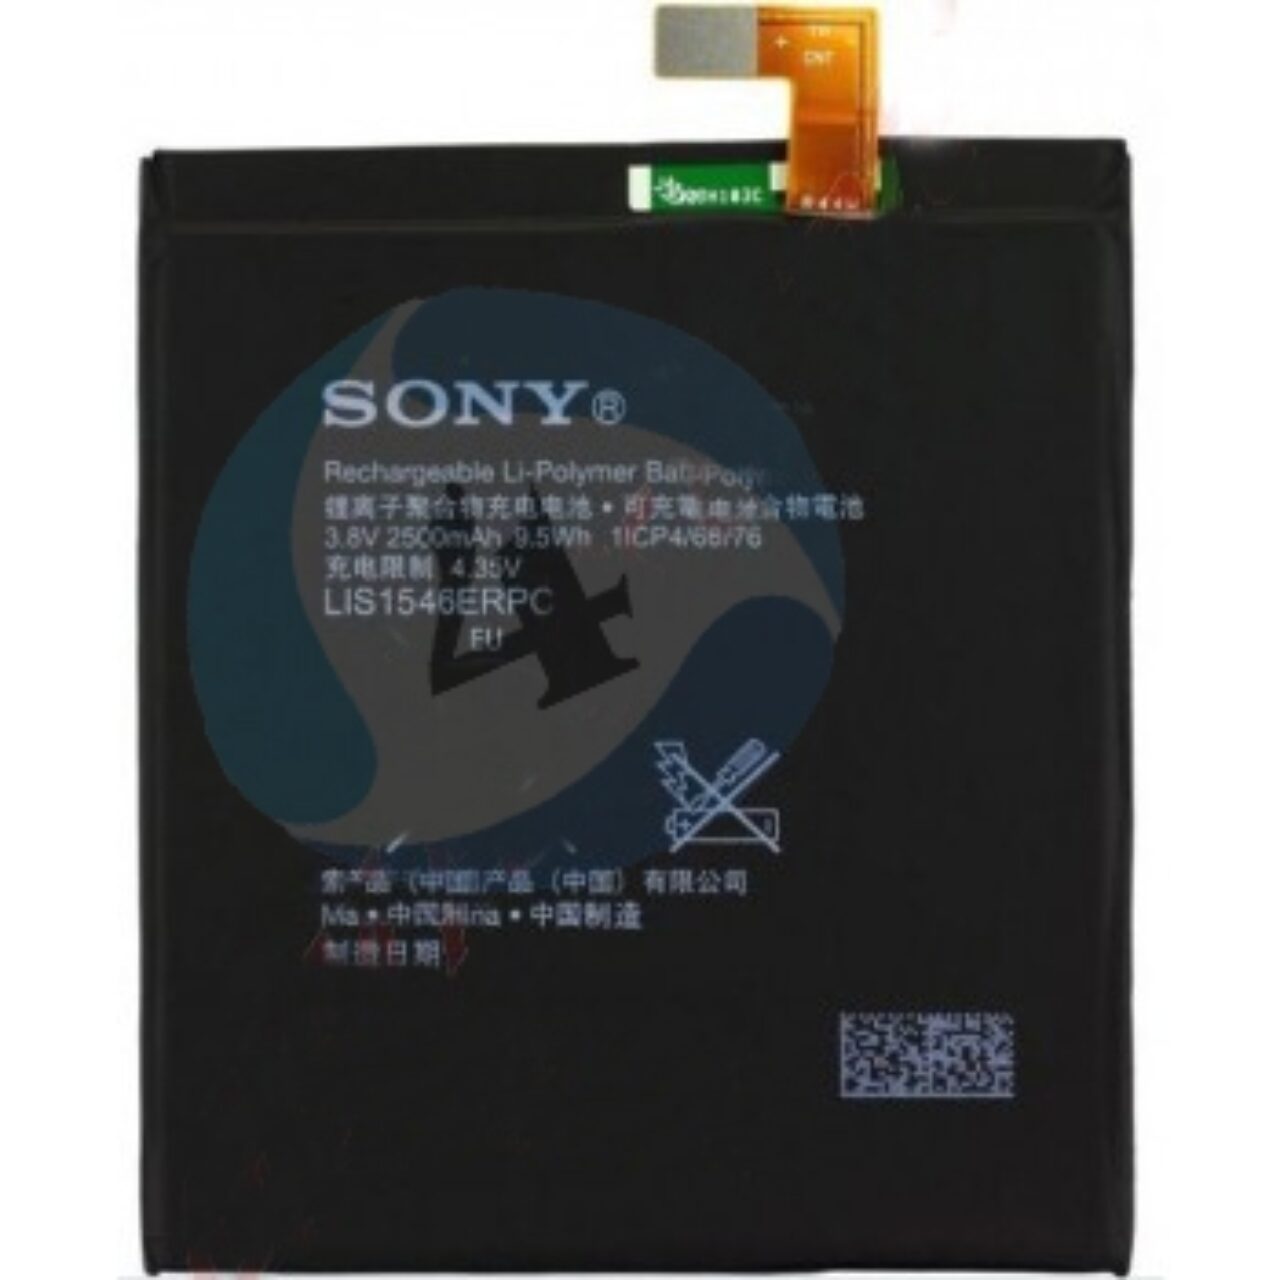 Sony Xperia T3 D5102 Battery LIS1546 ERPC 2500 m Ah 1278 2168